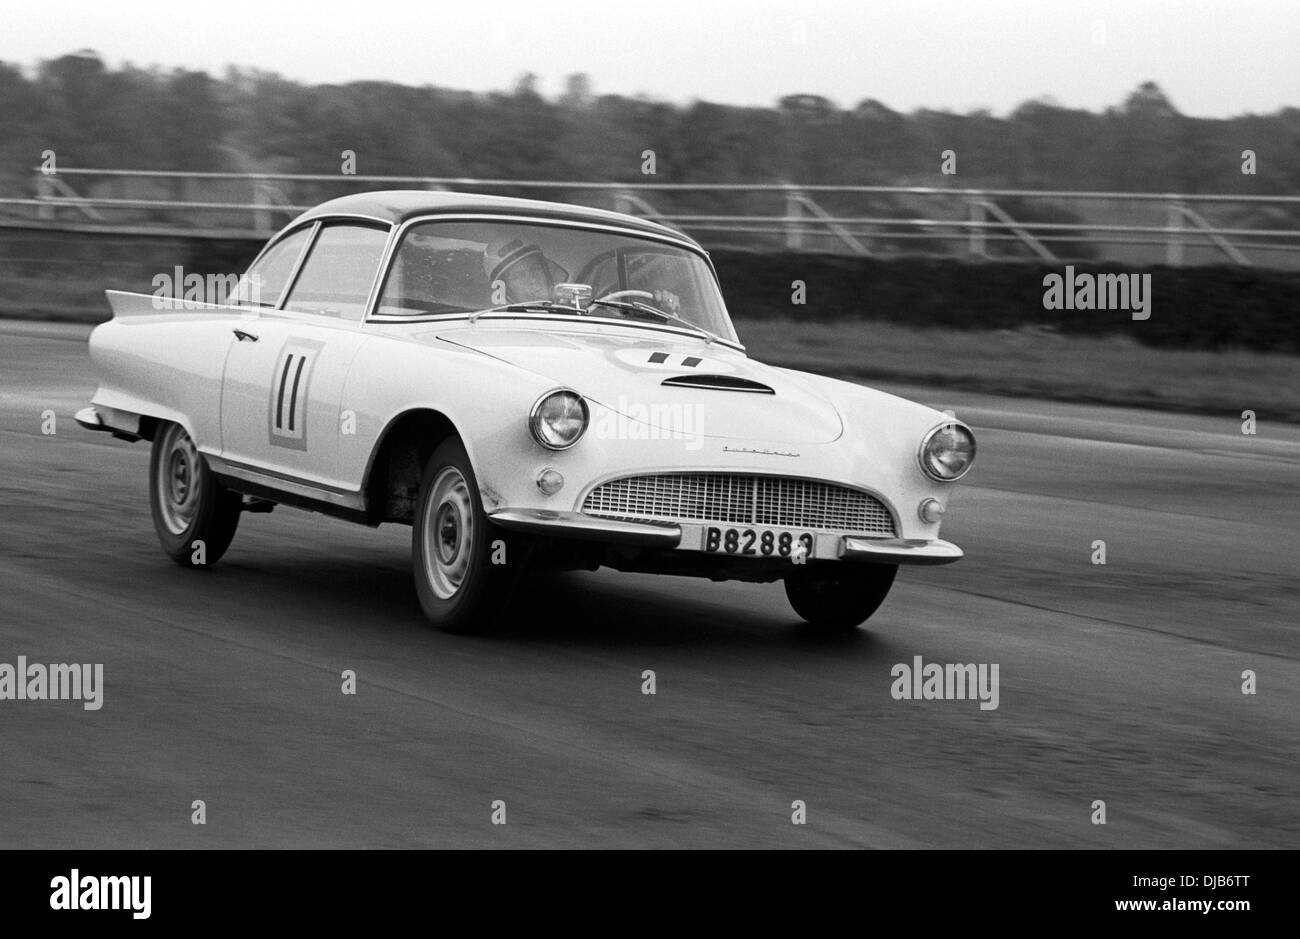 Automobile berlina B82889 racing nel trofeo internazionale, Silverstone, Inghilterra 1960. Foto Stock